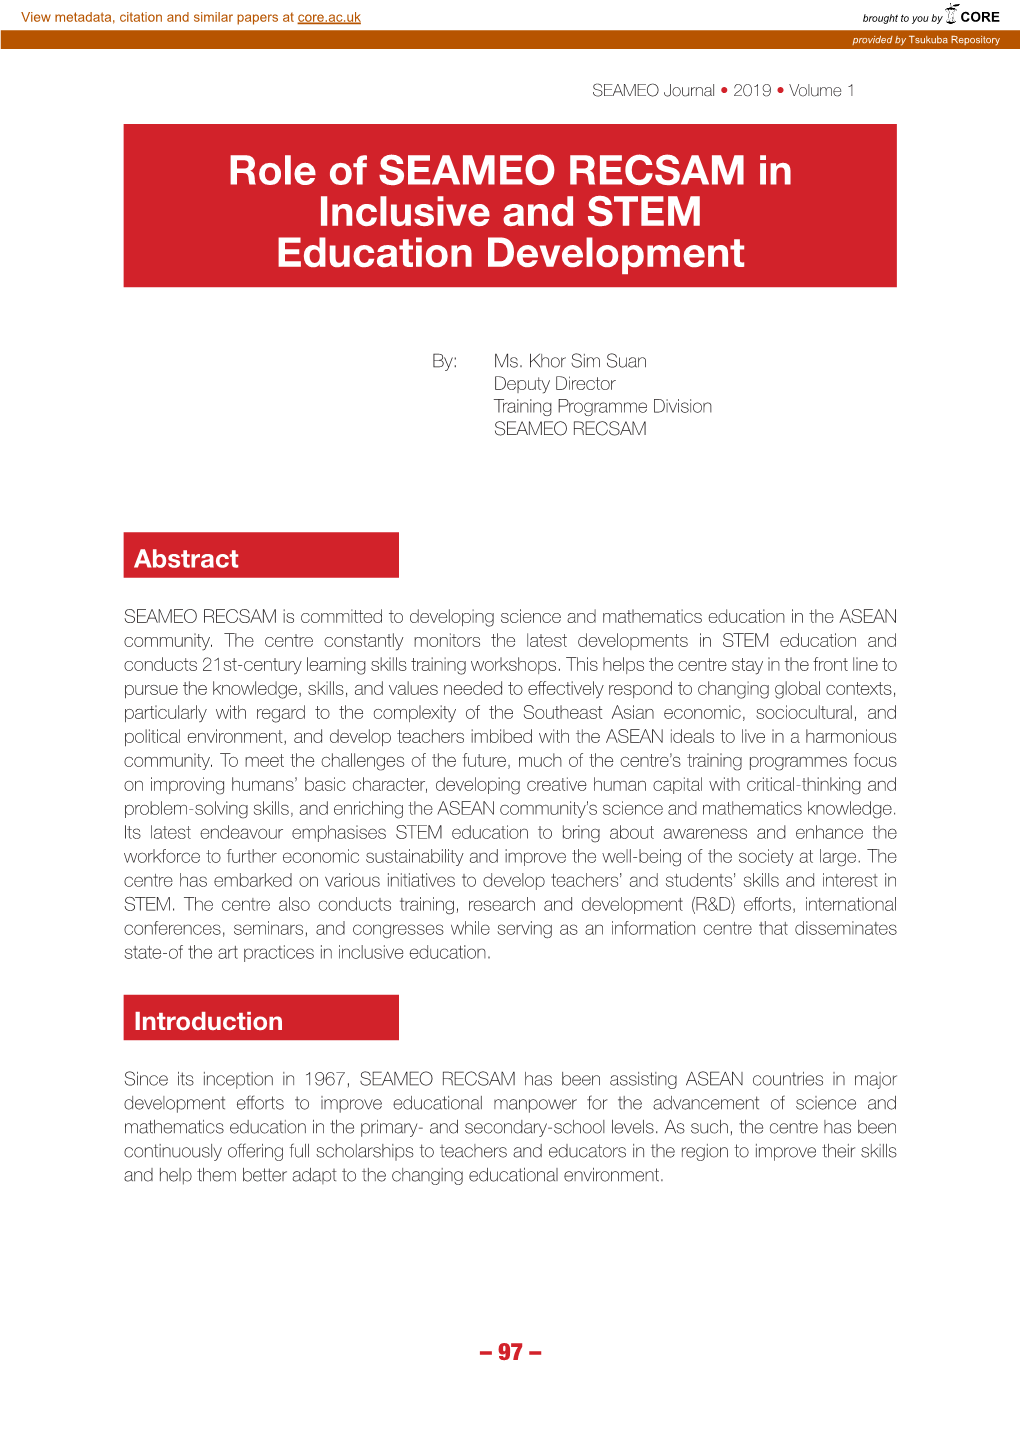 Role of SEAMEO RECSAM in Inclusive and STEM Education Development